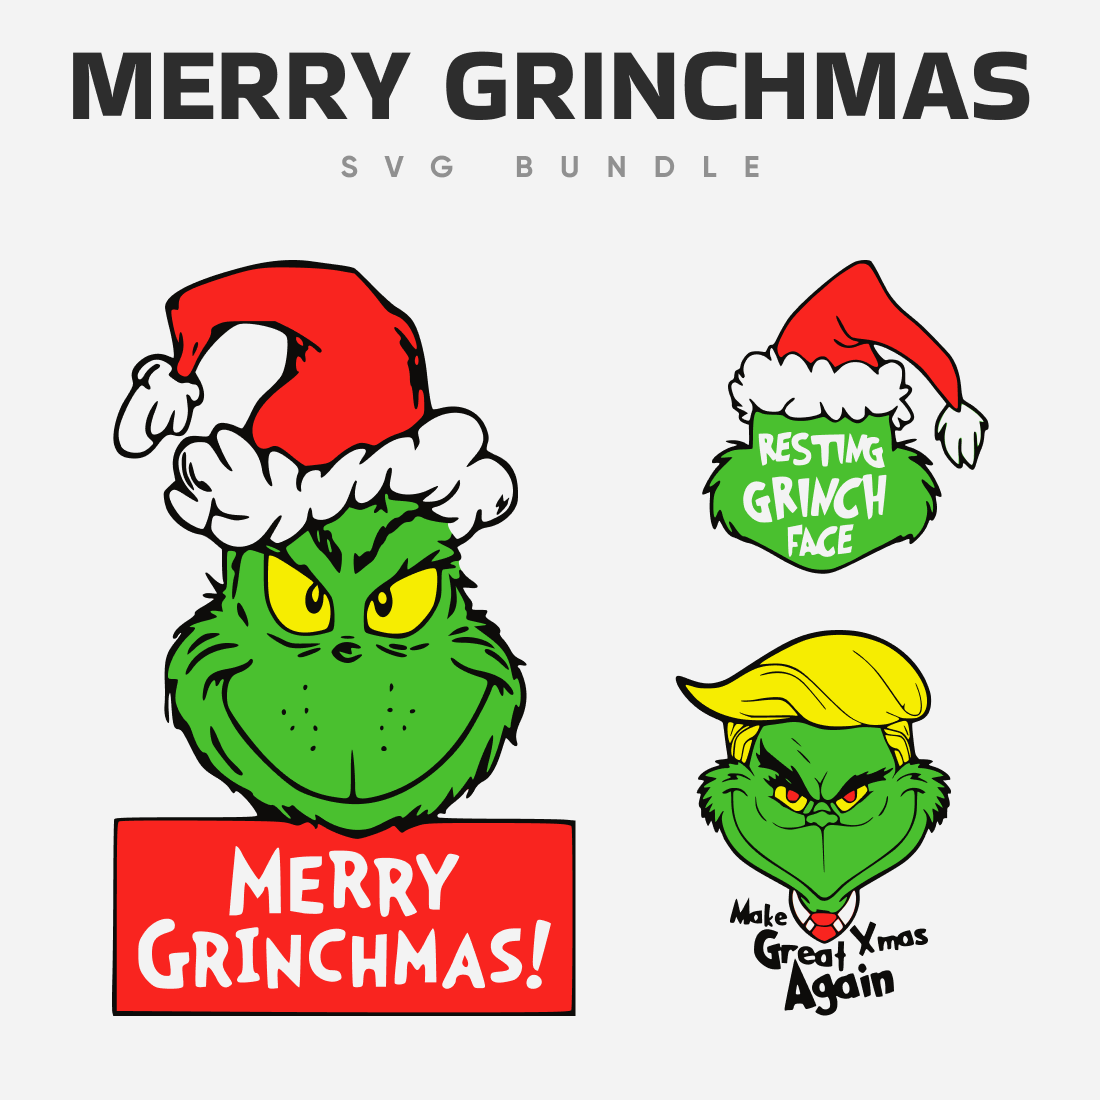 Interesting Merry grinchmas SVG bundle.